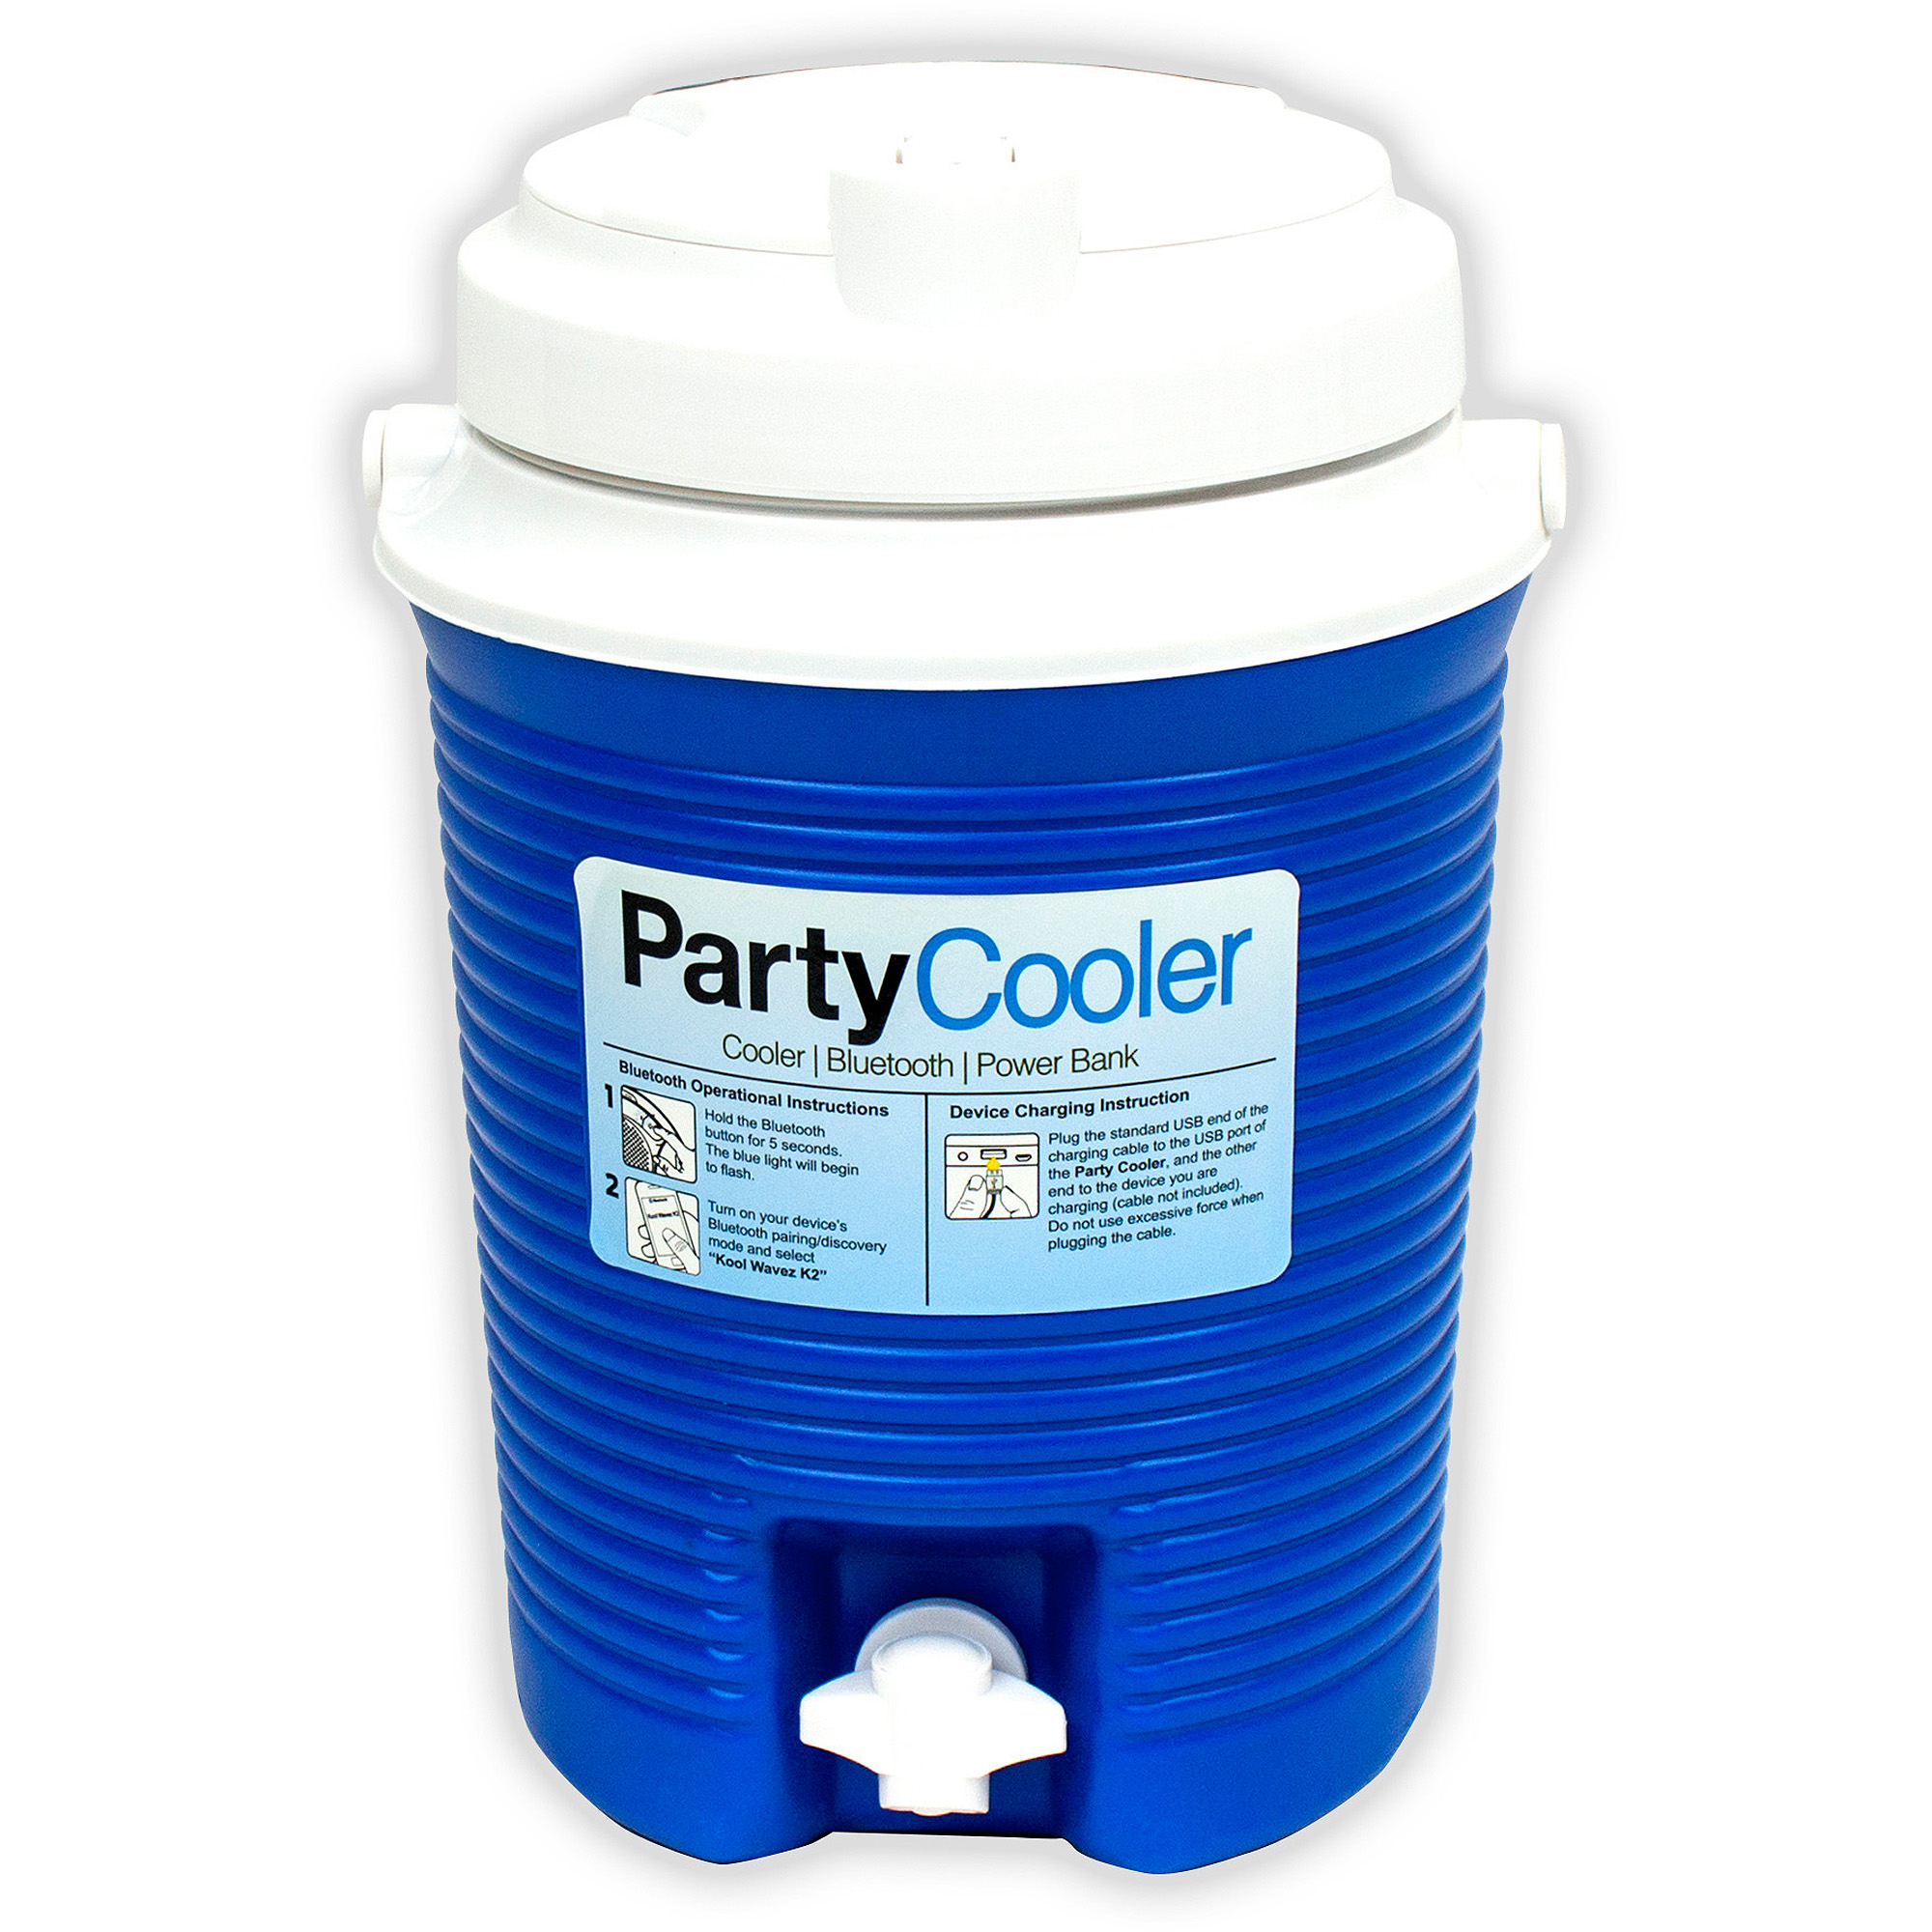 PartyCooler Wireless Speaker Cooler - image 2 of 4